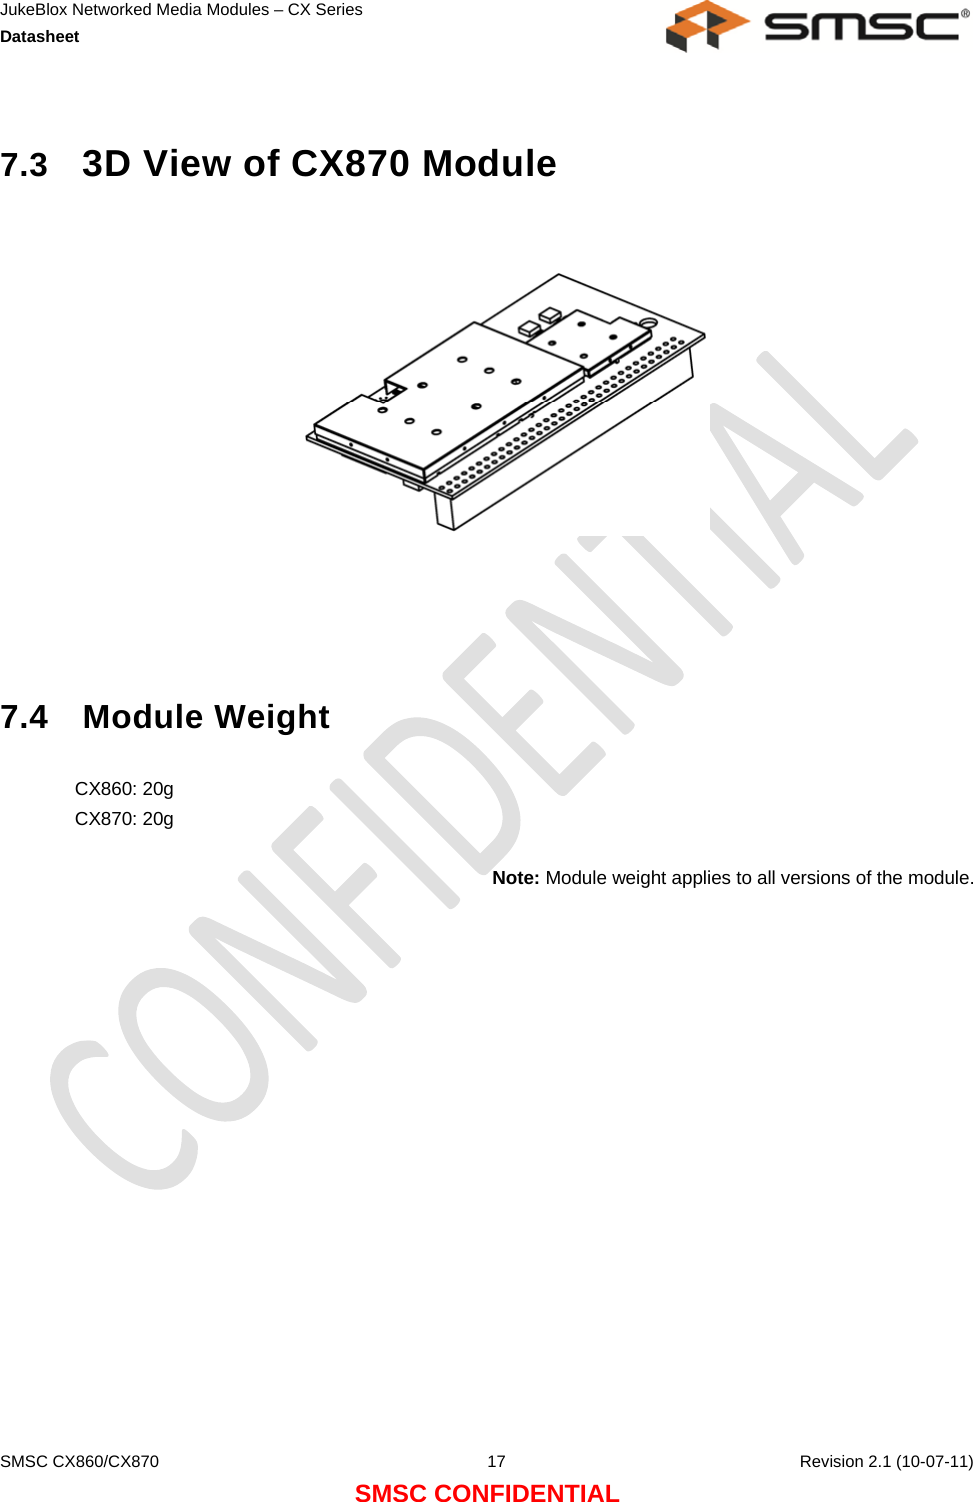 JukeBlox Networked Media Modules – CX Series  Datasheet    SMSC CX860/CX870  17    Revision 2.1 (10-07-11) SMSC CONFIDENTIAL  7.3  3D View of CX870 Module        7.4 Module Weight  CX860: 20g CX870: 20g  Note: Module weight applies to all versions of the module.  